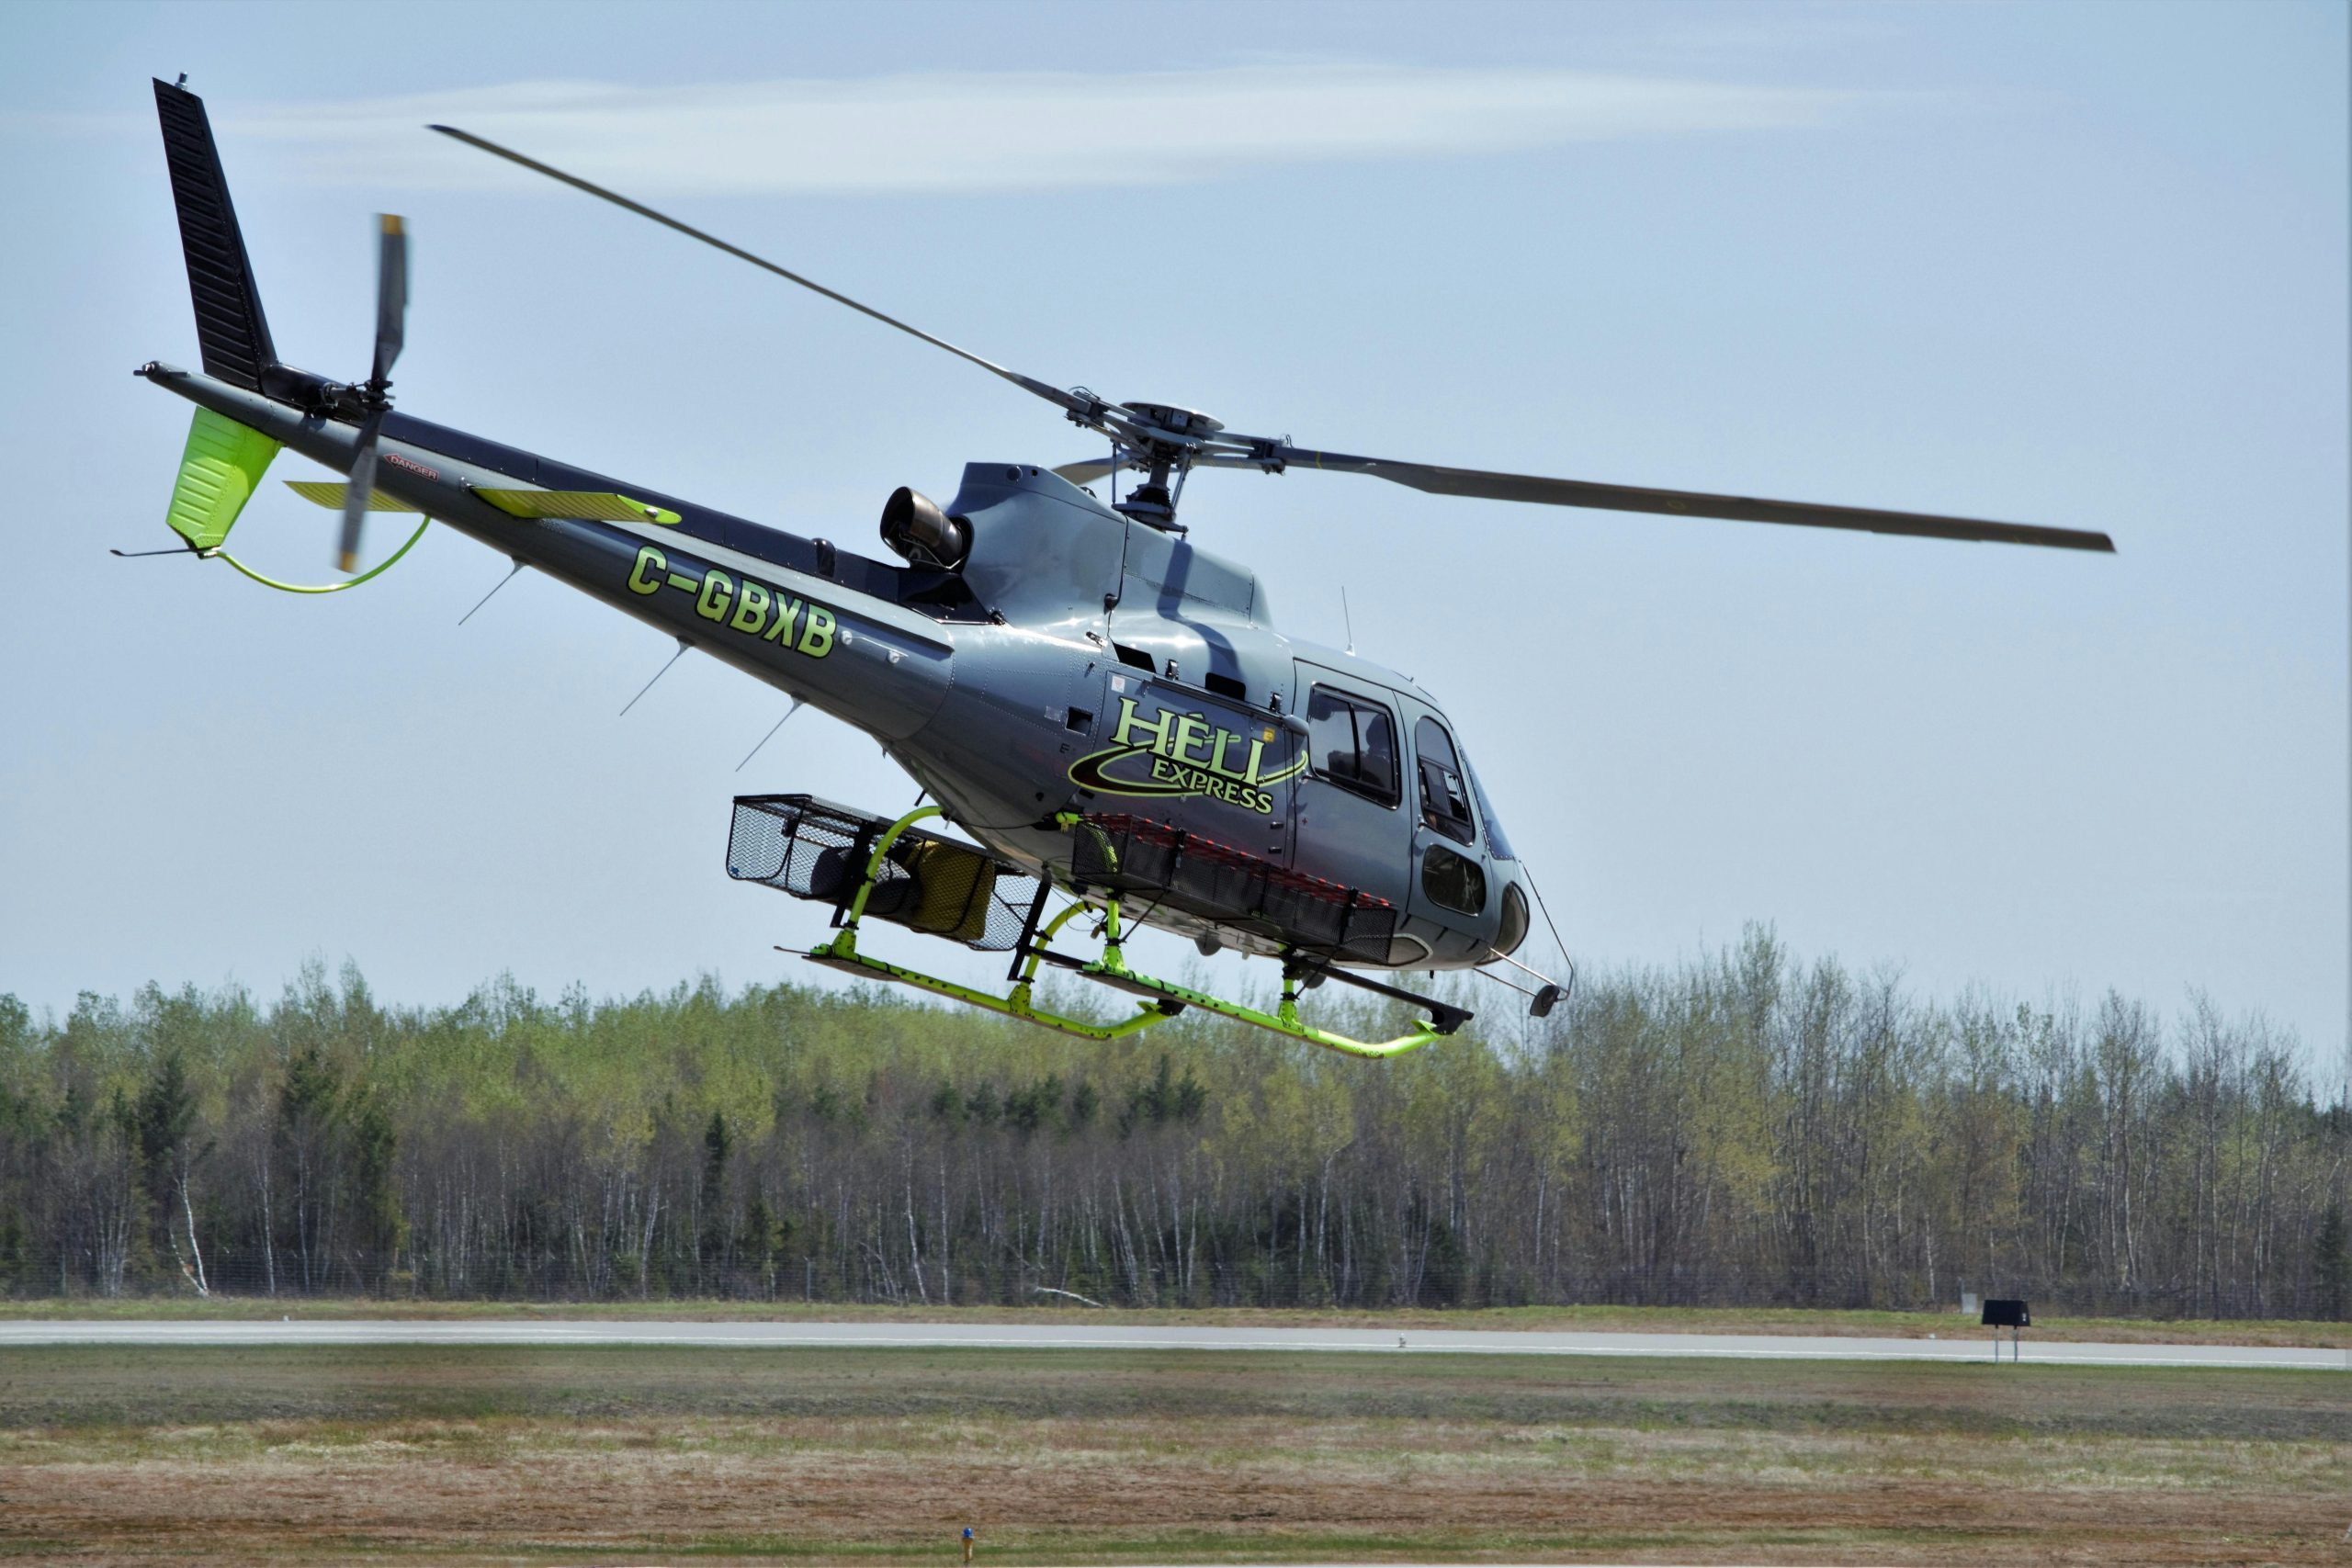 Savback Helicopters